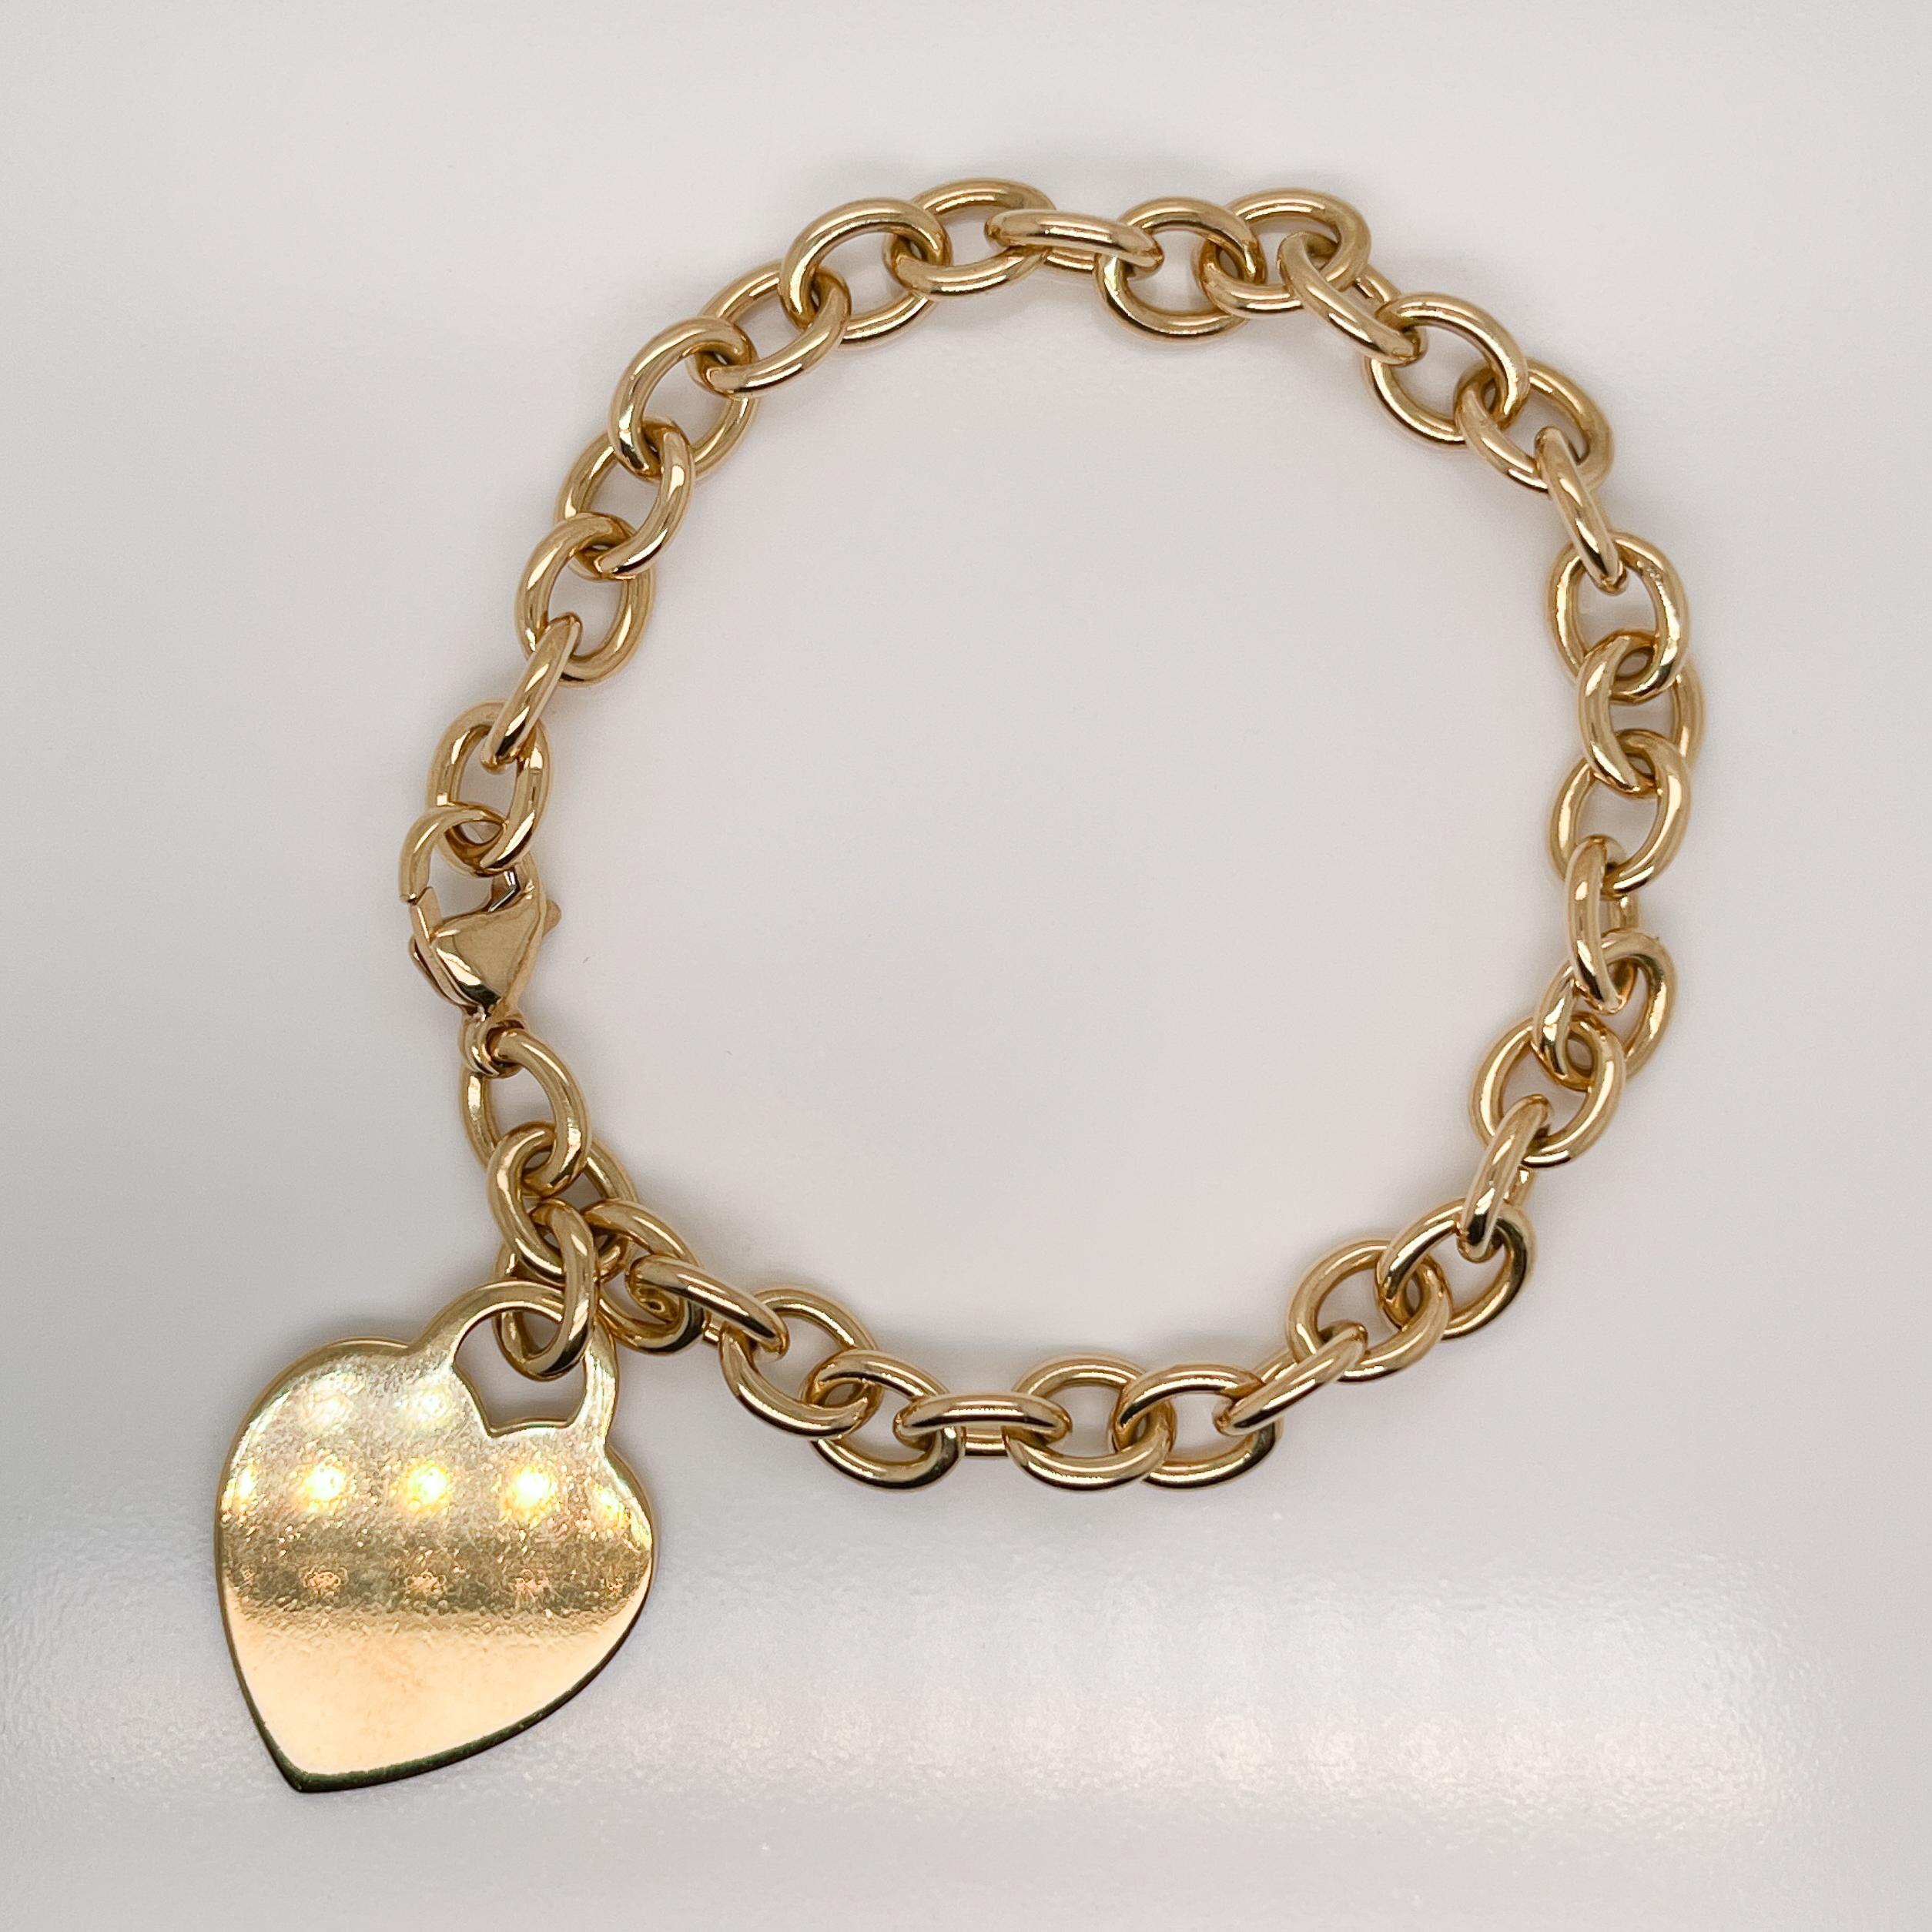 Authentic! Tiffany & Co 18k White Gold Heart Key Wire Flex Bracelet 6